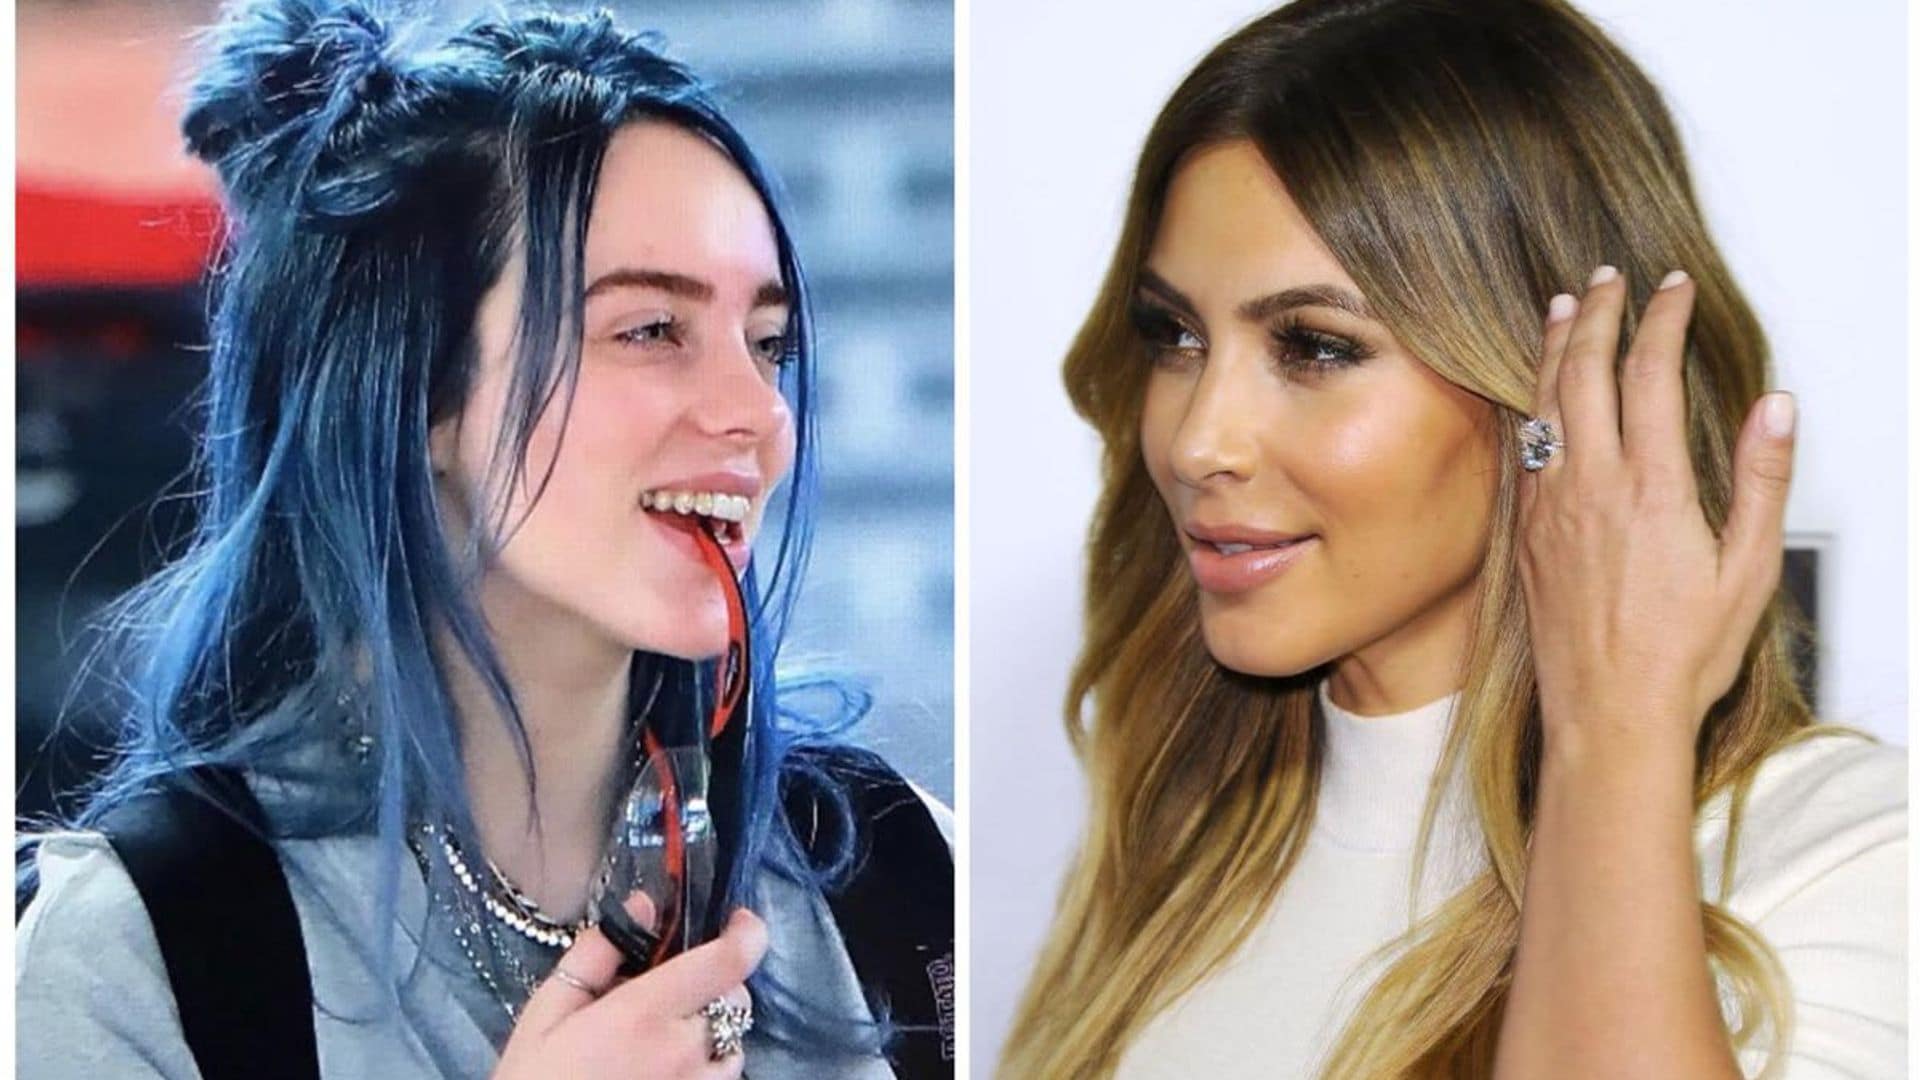 Billie Eilish supports Kim Kardashian’s brand by wearing it in her latest music video